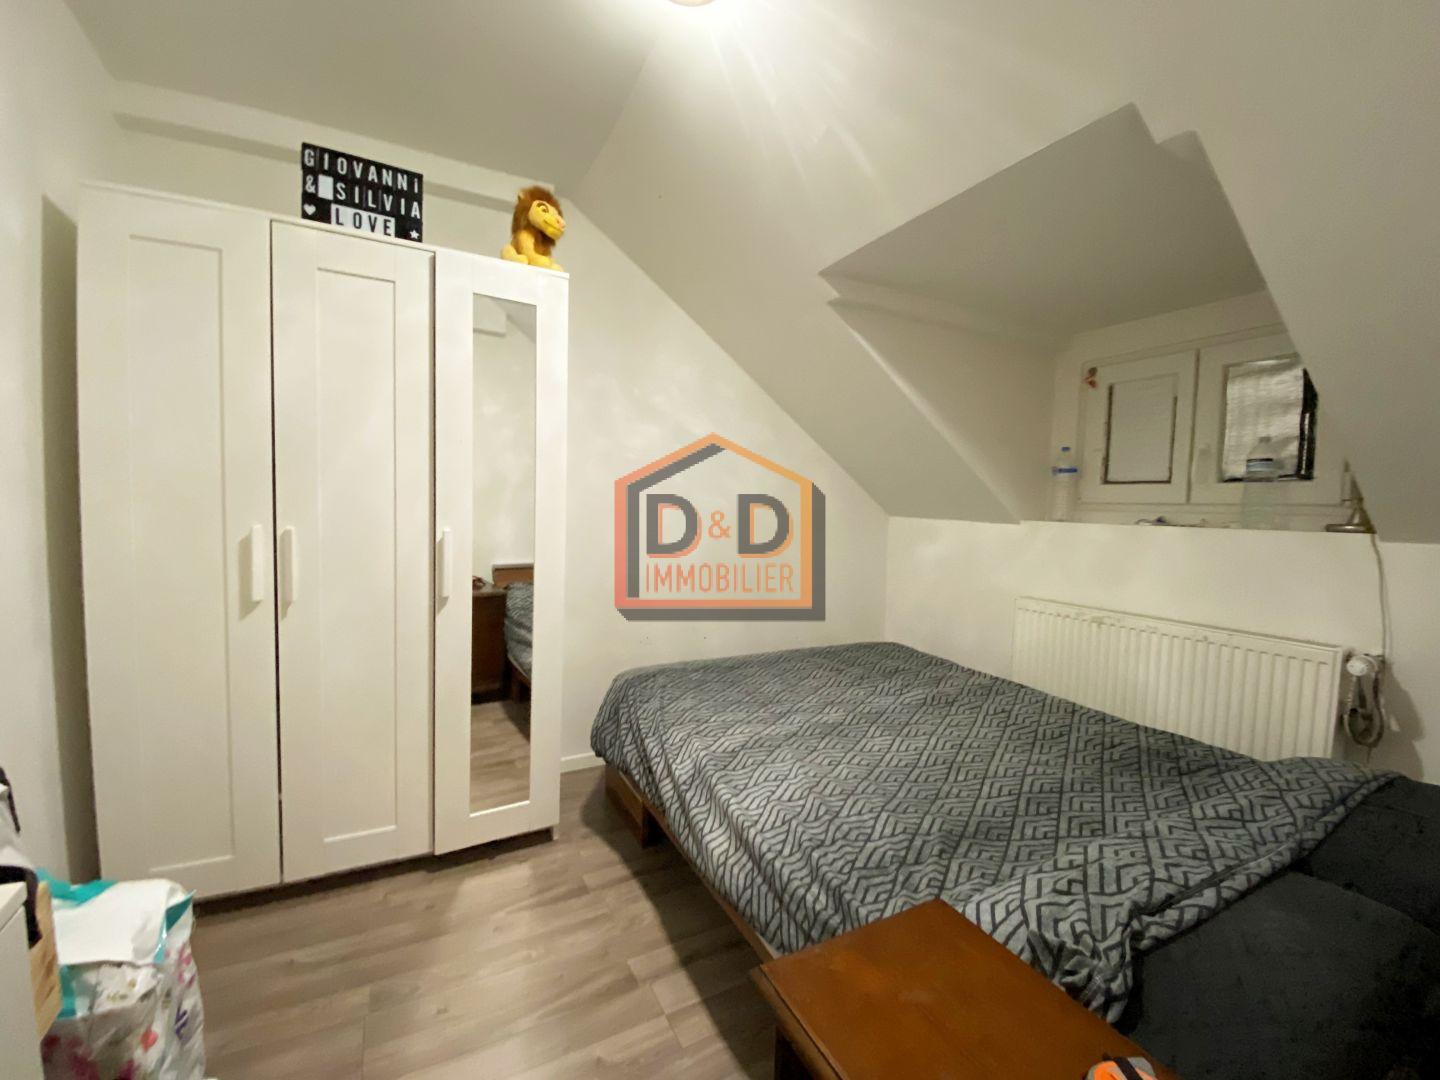 Appartement à Sandweiler, 45 m², 1 chambre, 1 salle de bain, 1 150 €/mois